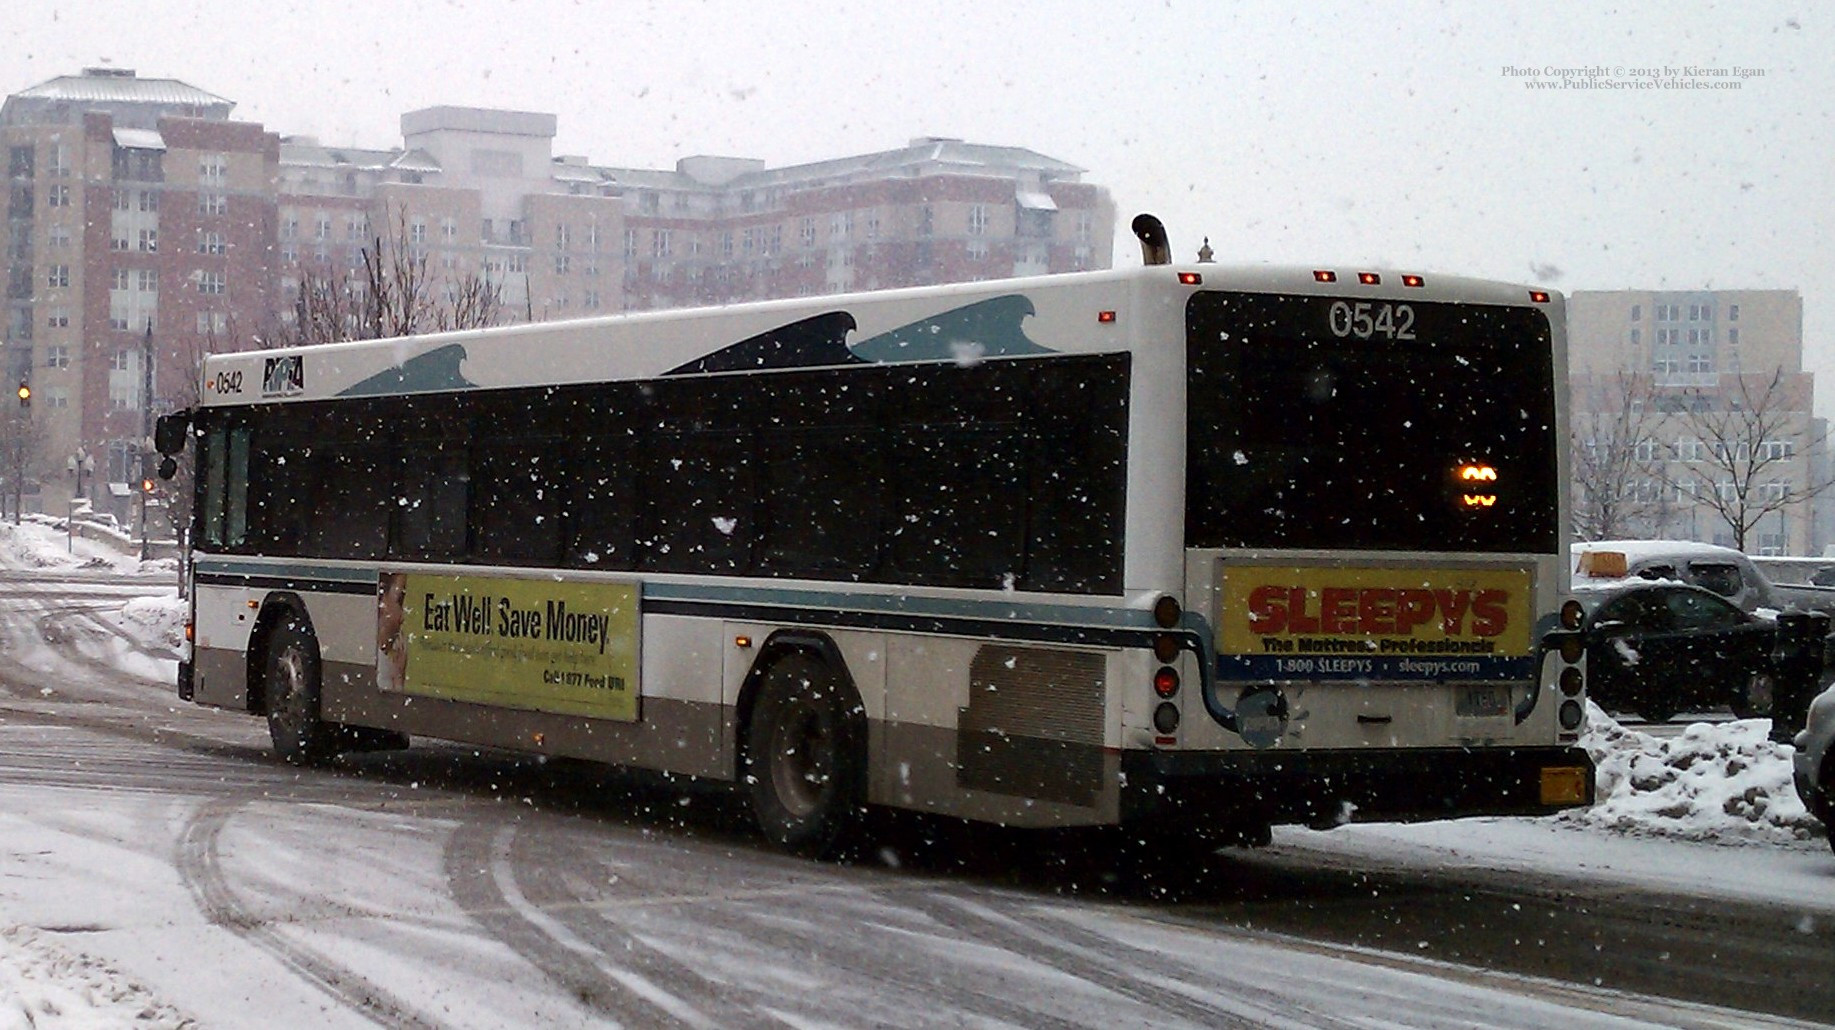 A photo  of Rhode Island Public Transit Authority
            Bus 0542, a 2005 Gillig Low Floor             taken by Kieran Egan